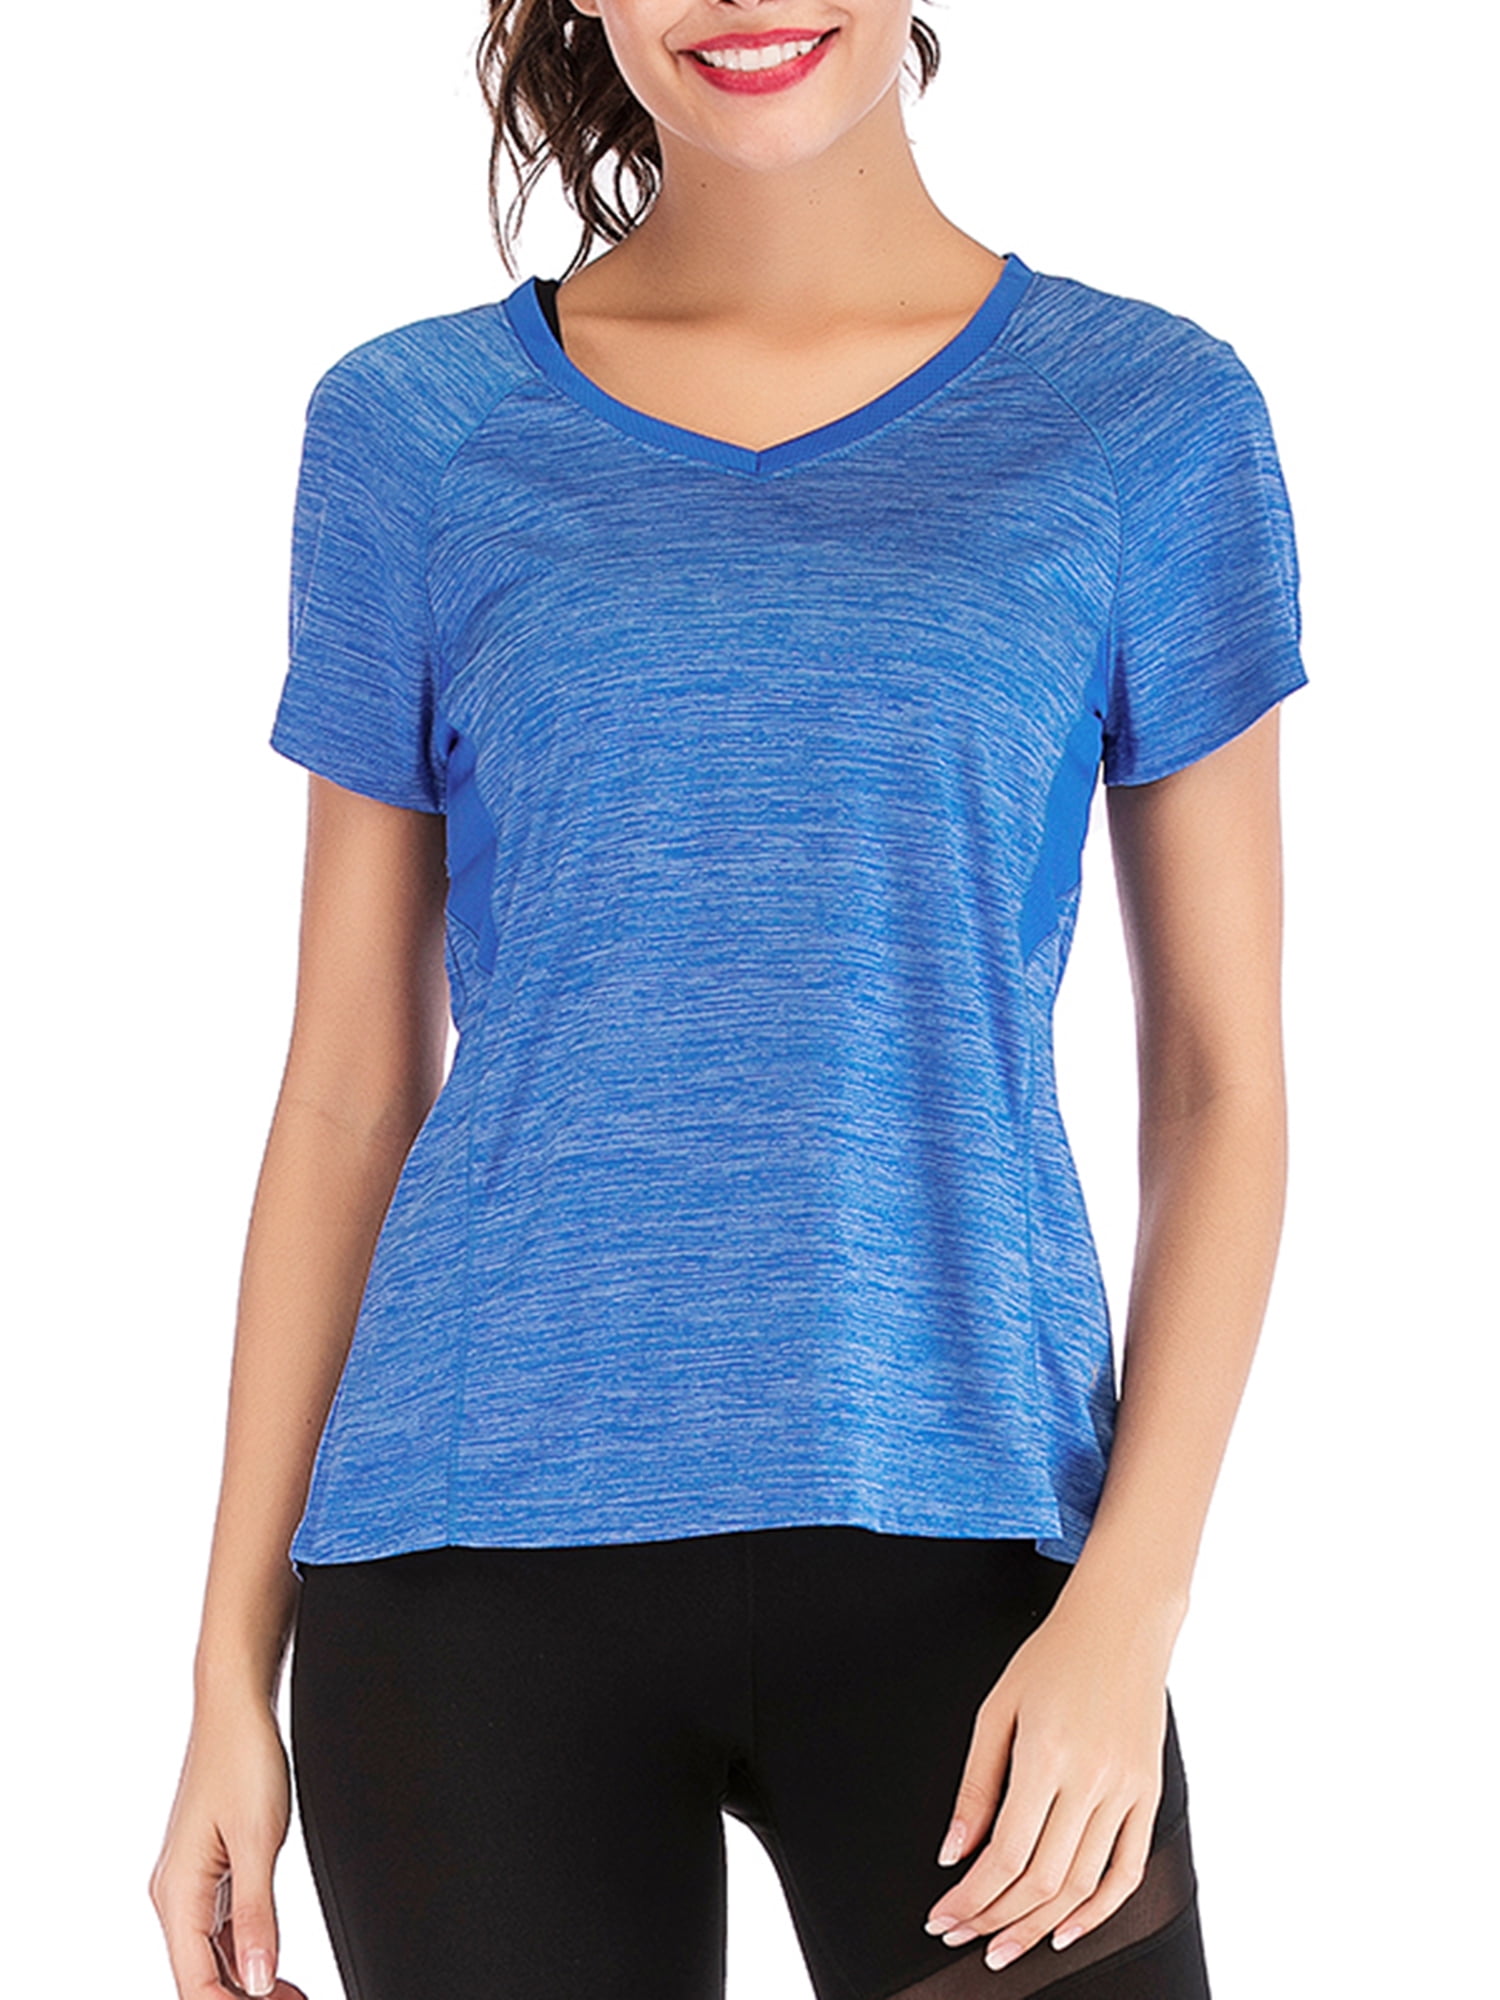 SAYFUT - Women Quick Dry Slim Fit Sports Yoga Shirts Tops Active Wear ...